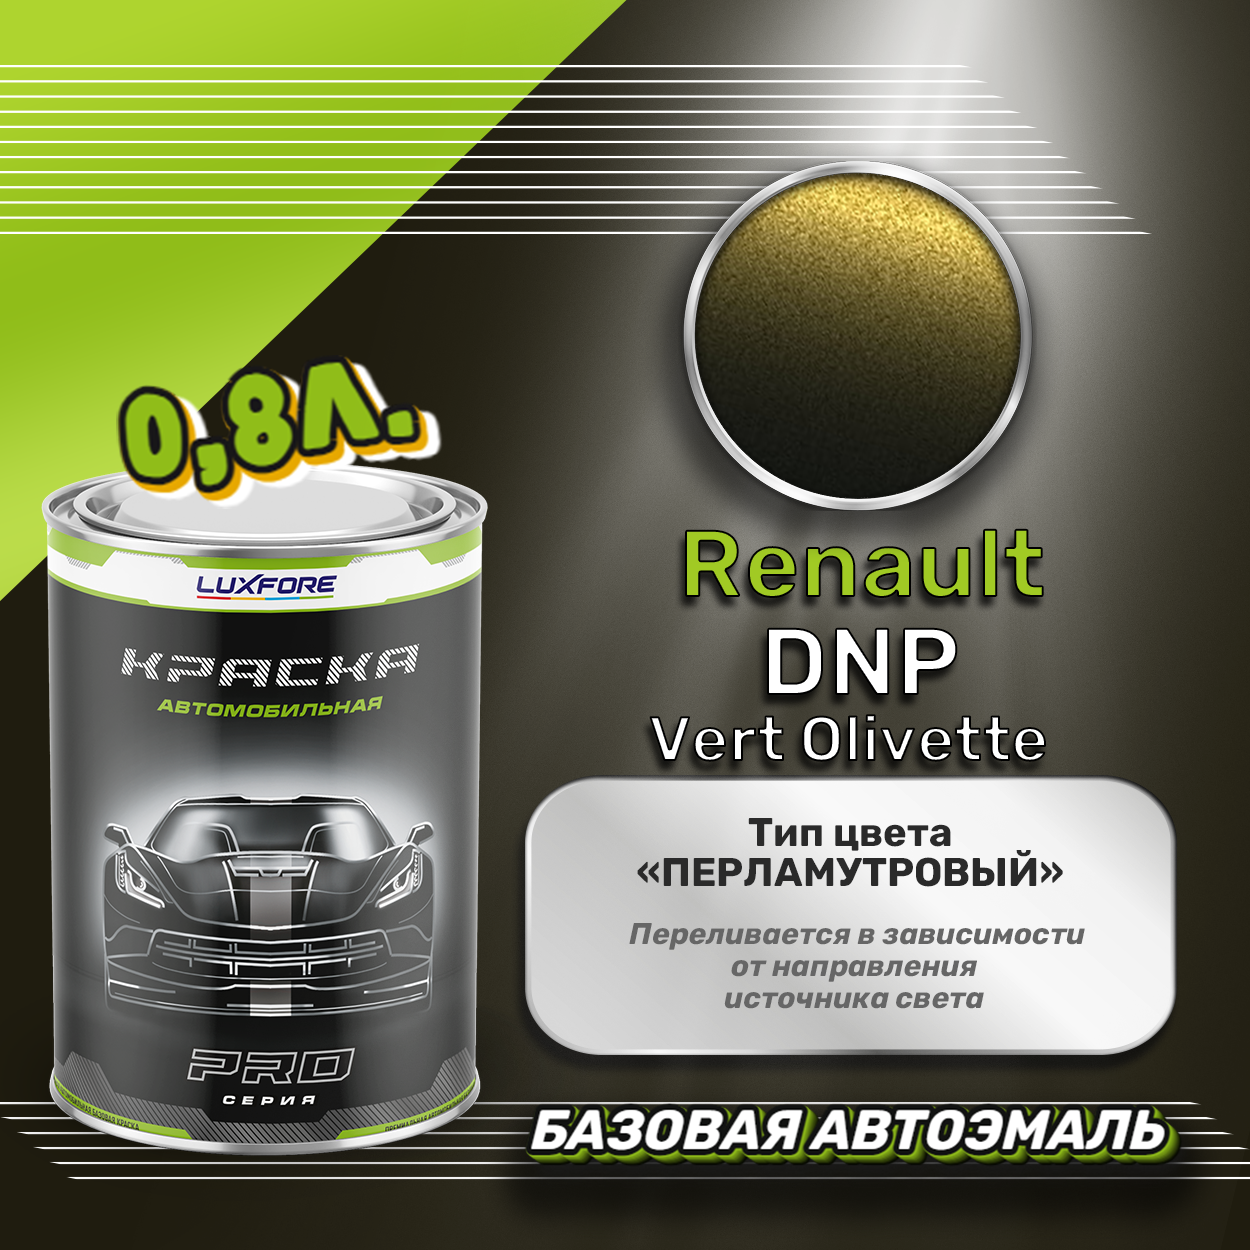 Luxfore краска базовая эмаль Renault DNP Vert Olivette 800 мл